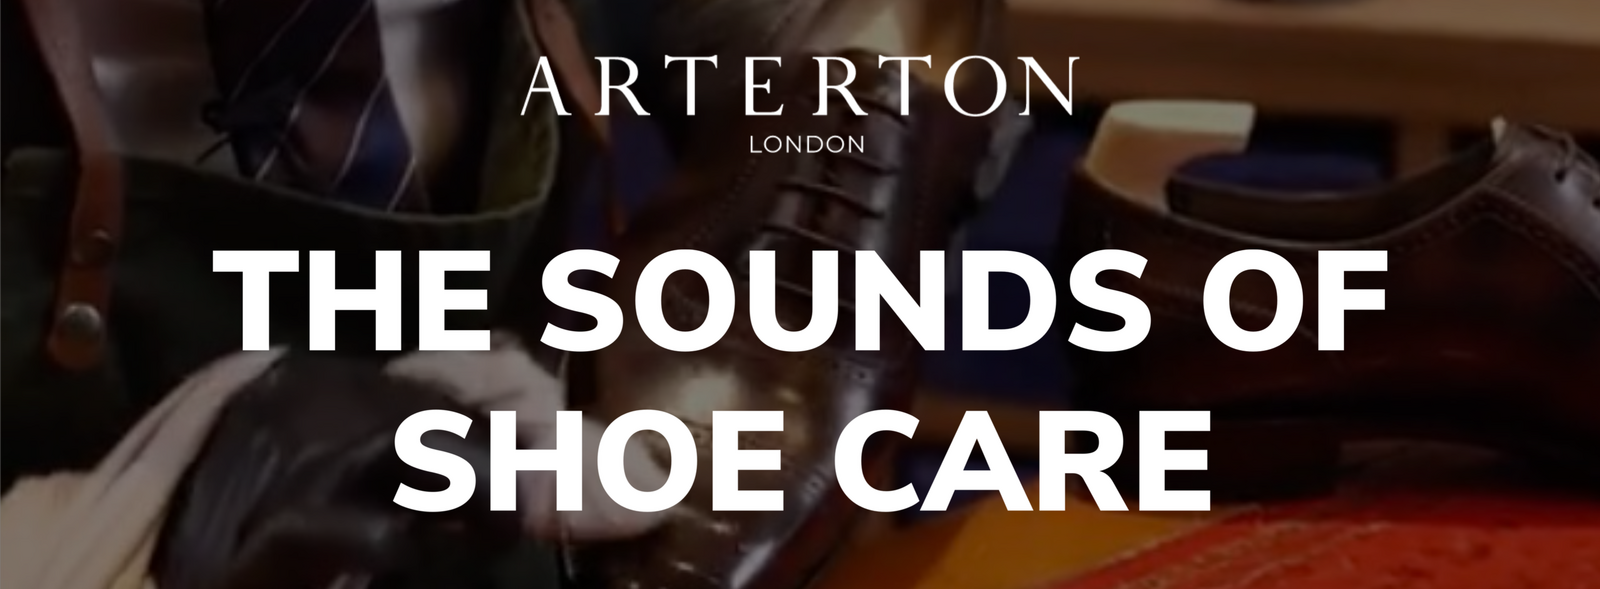 Arterton - The Sounds of Shoe Care